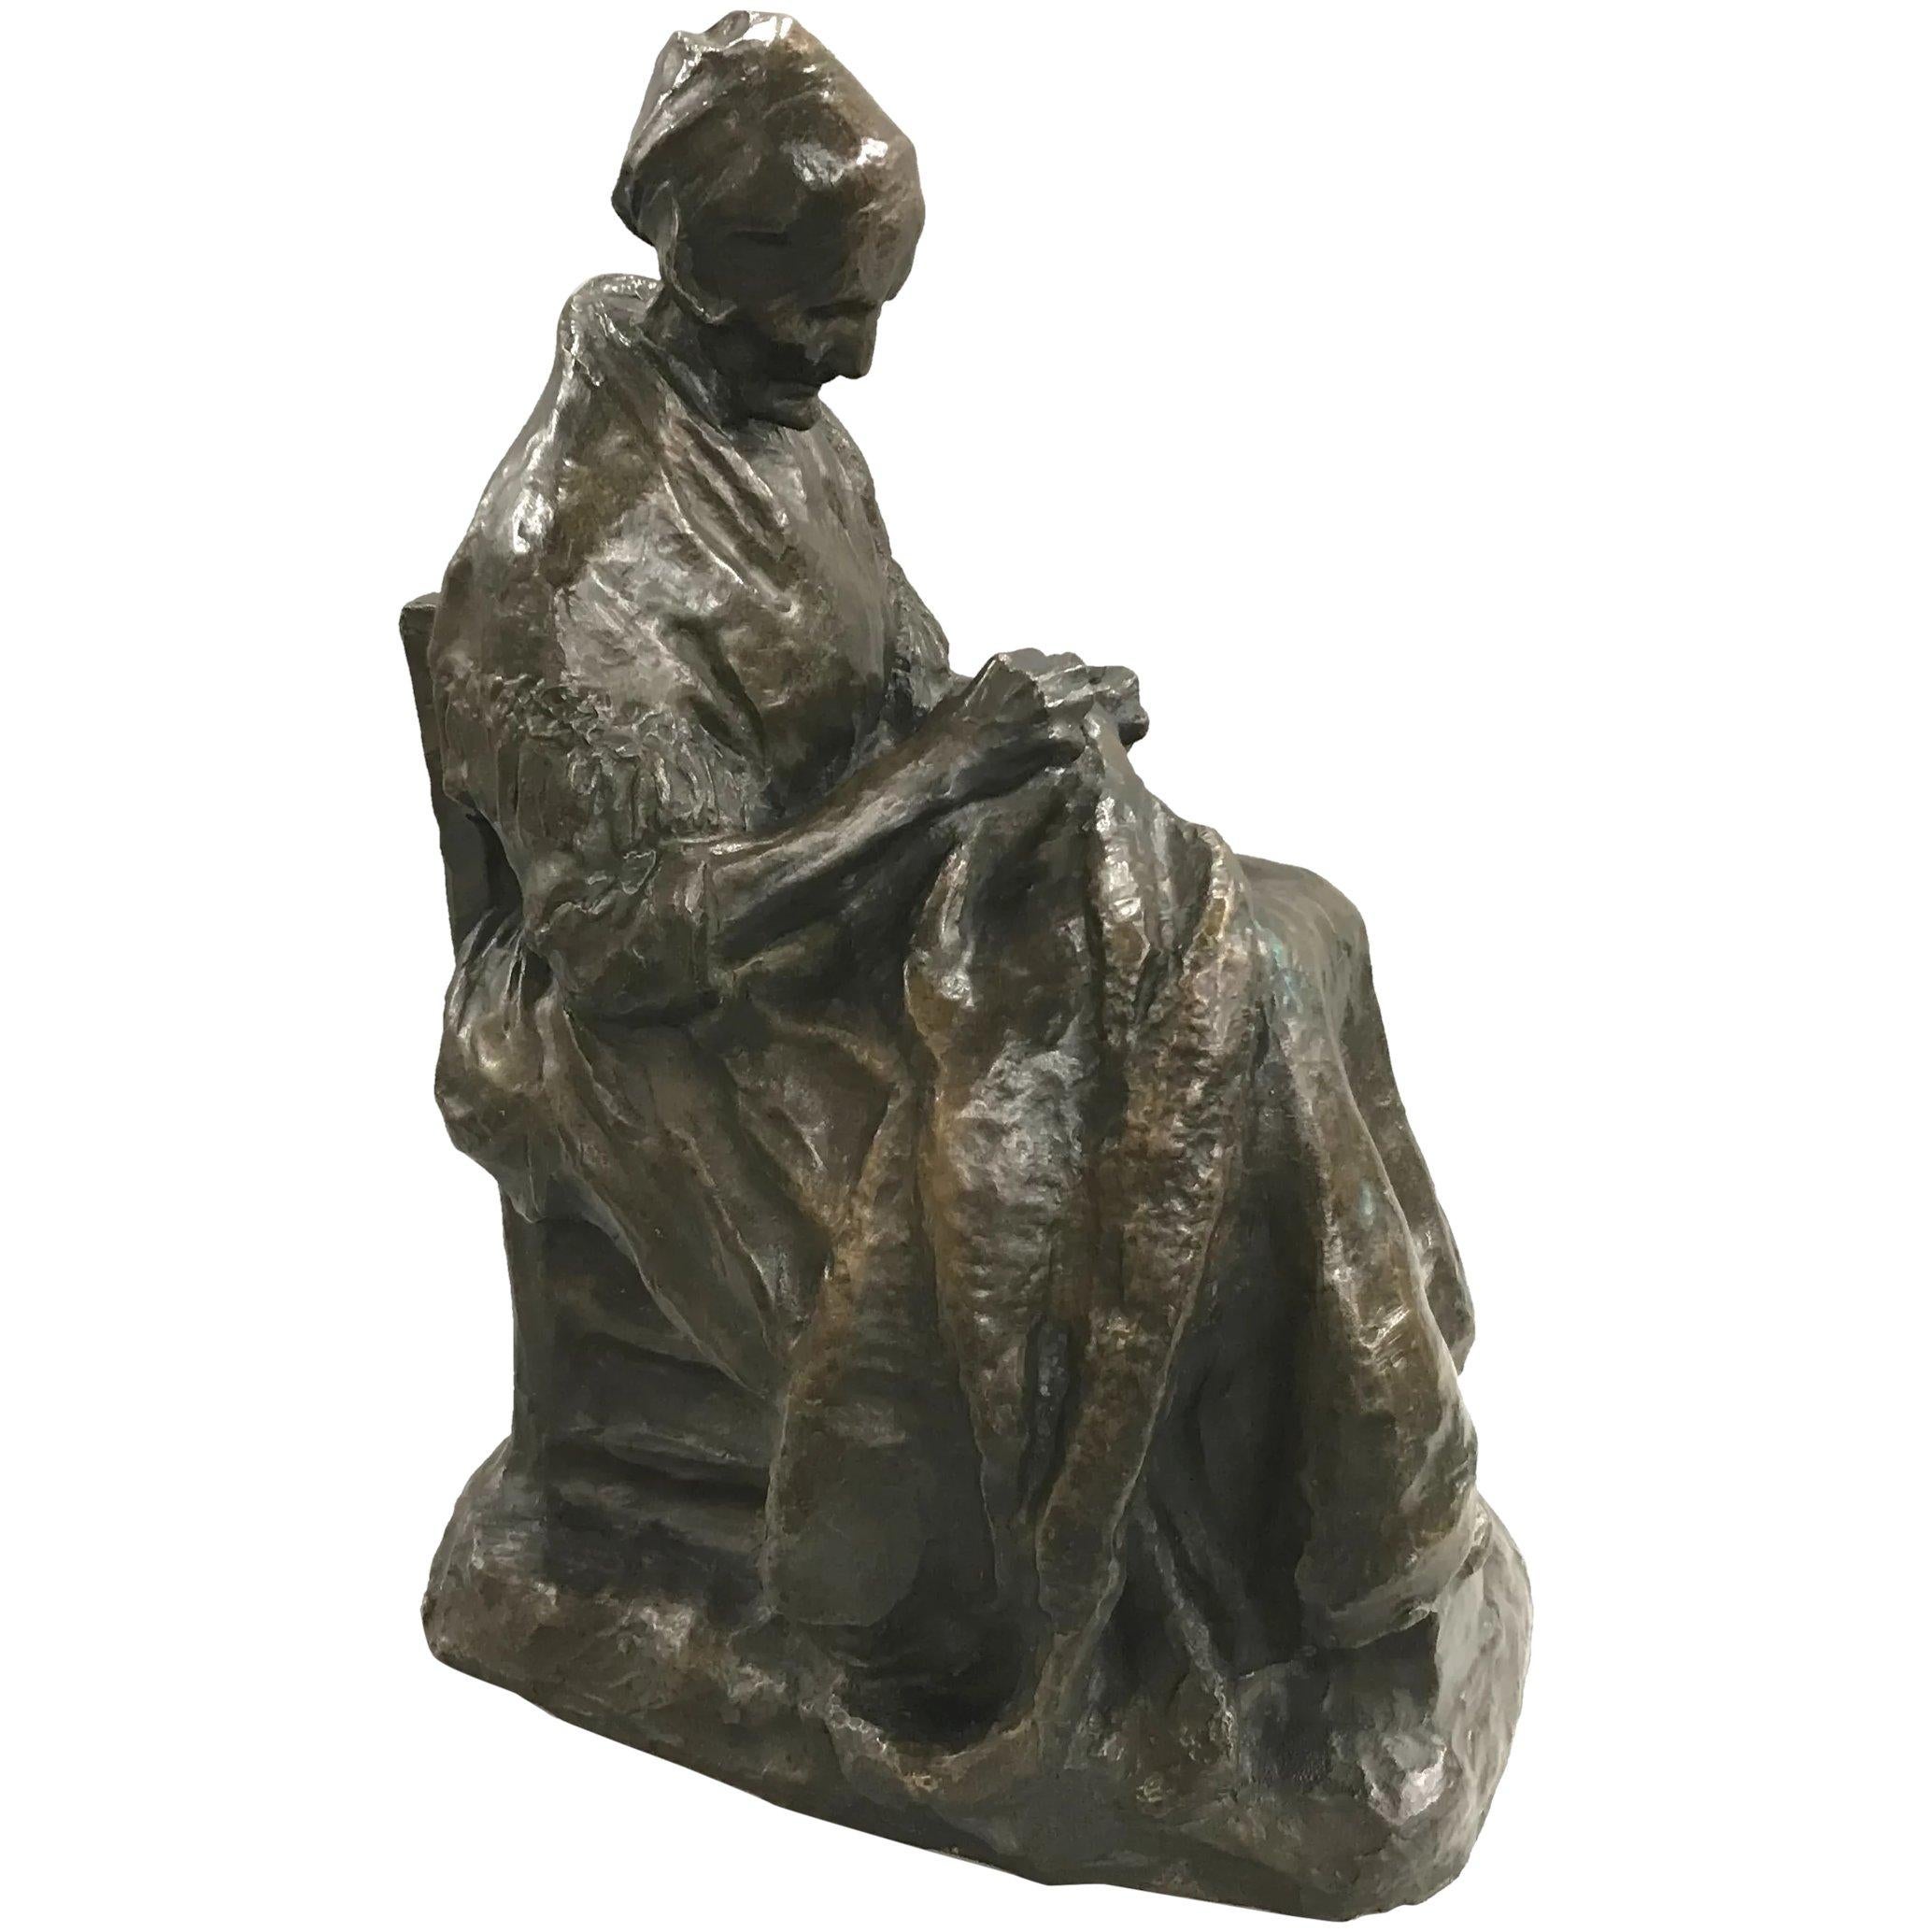 Charles Van Wijk Figurative Sculpture - Old Woman Stitching